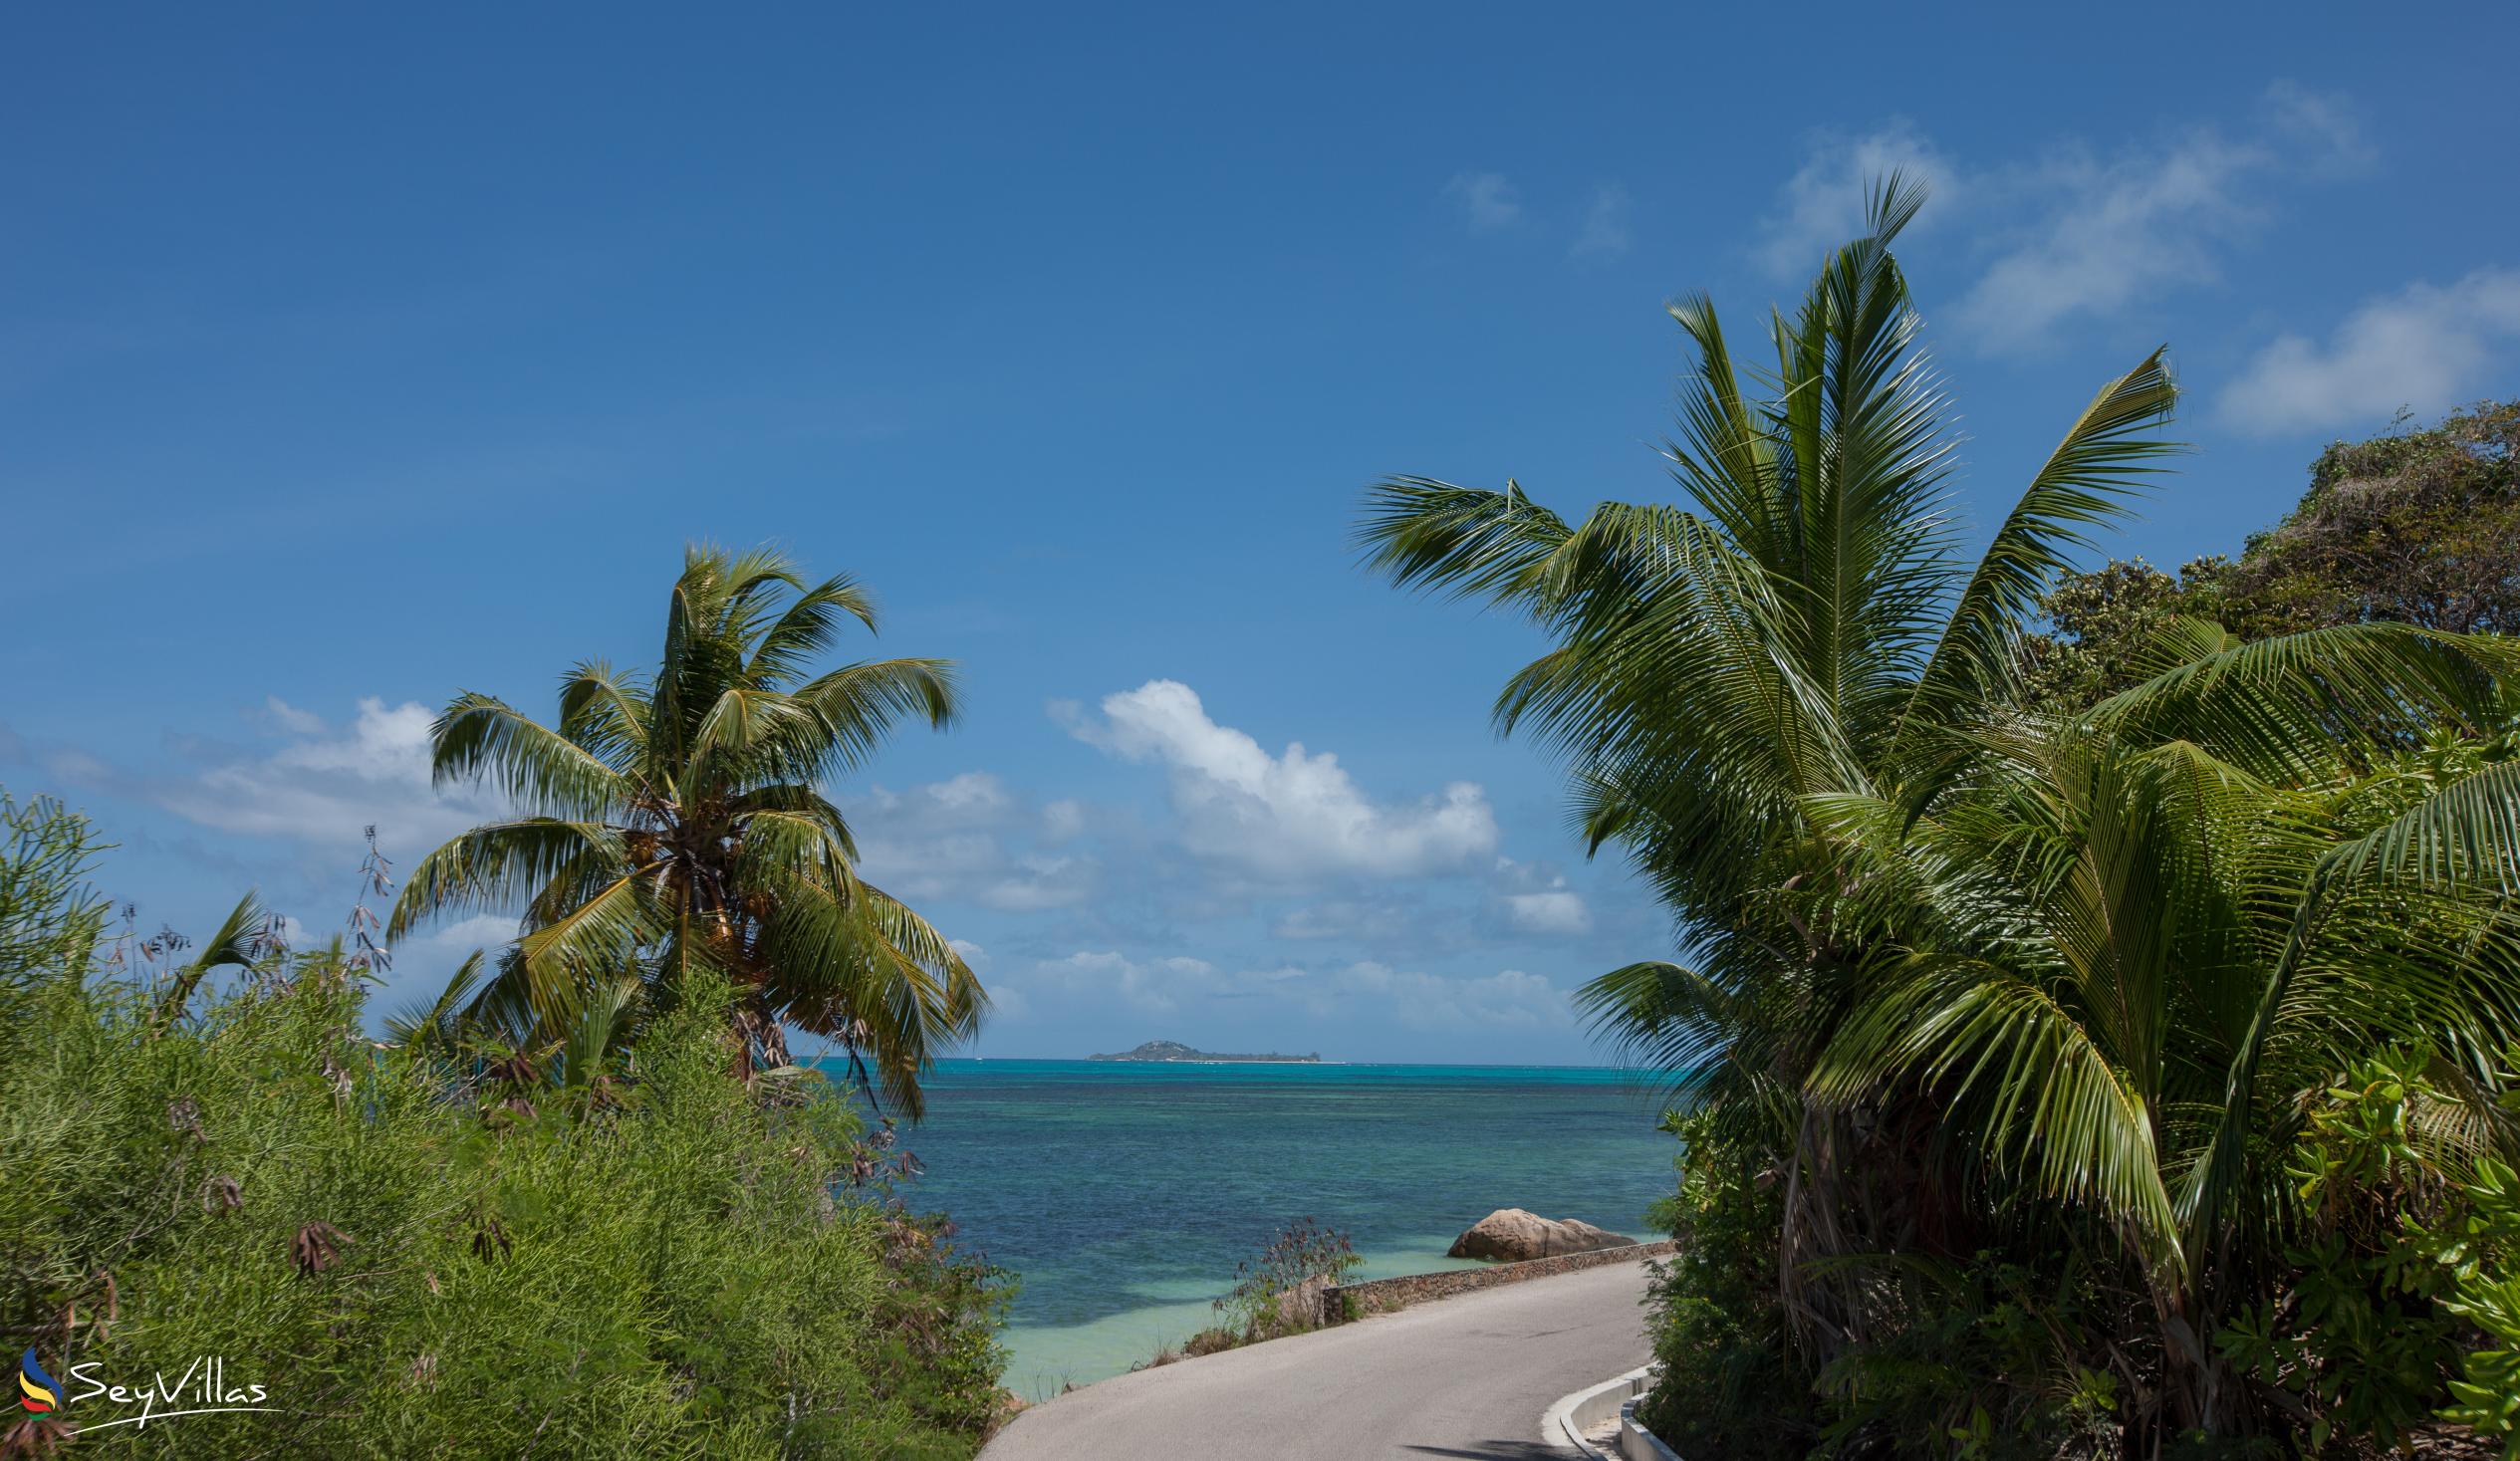 Photo 24: YASAD Luxury Beach Residence - Location - Praslin (Seychelles)